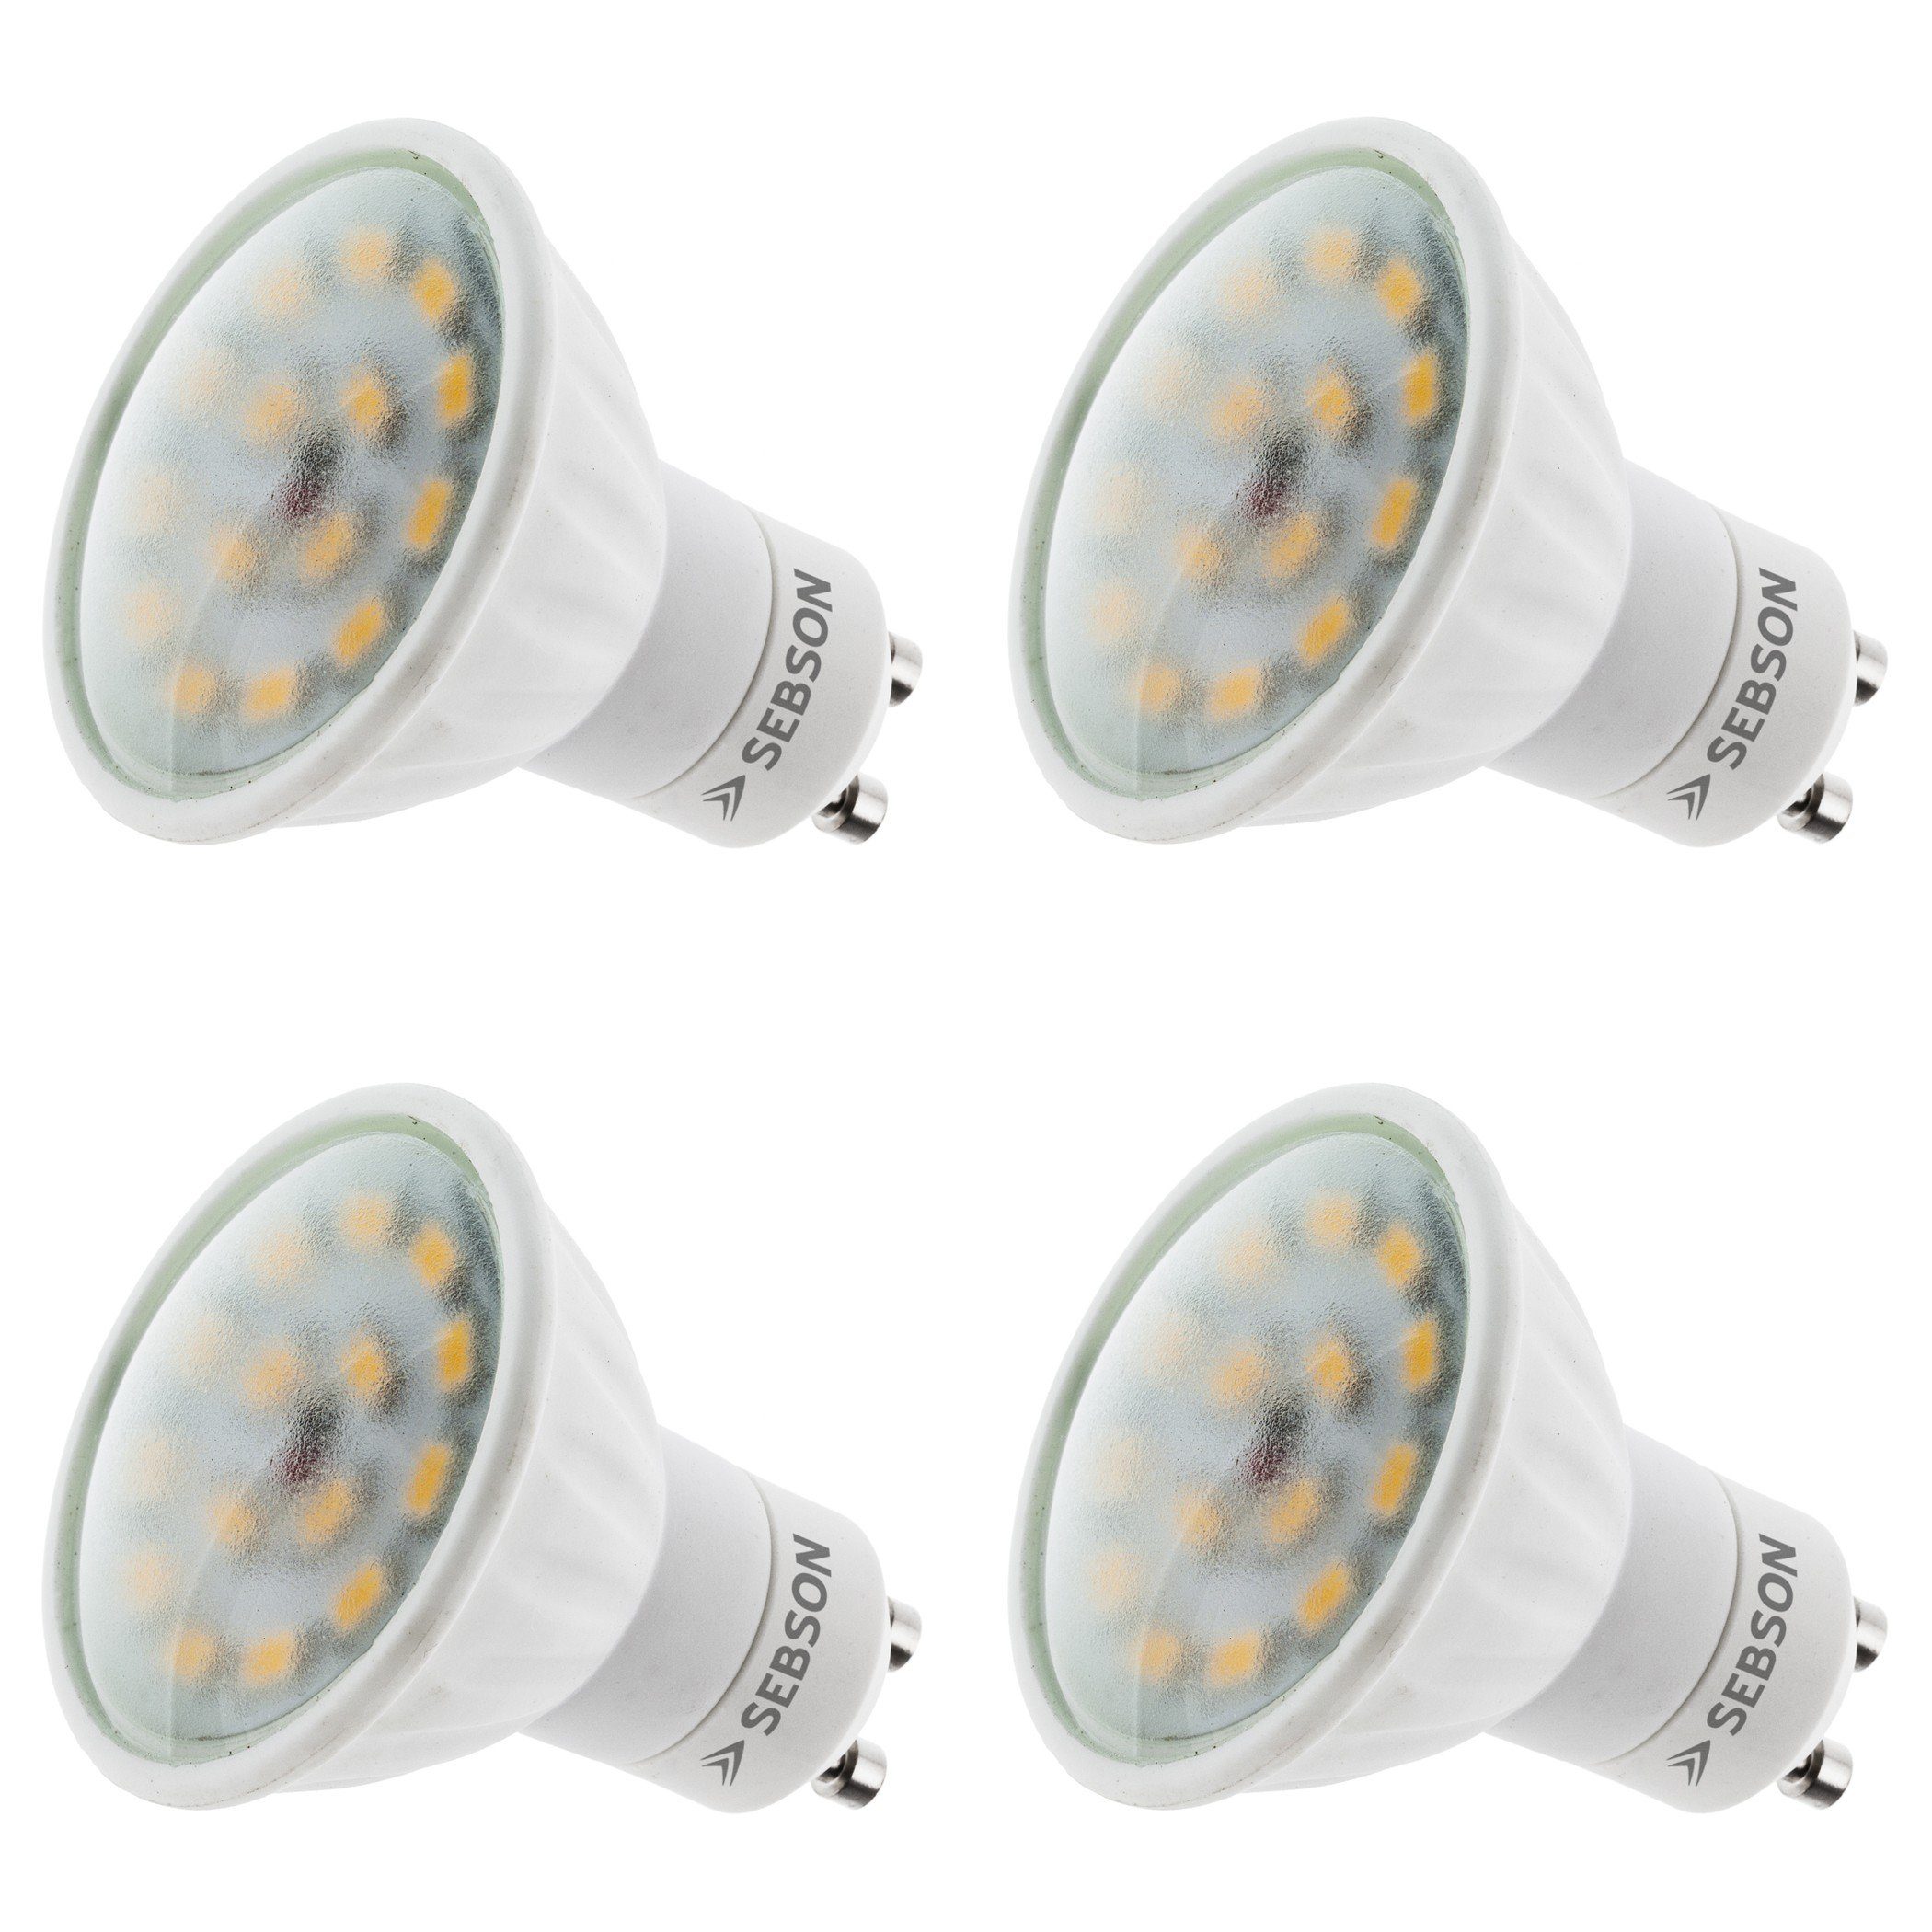 SEBSON LED-Leuchtmittel LED Lampe GU10 warmweiß 5W Strahler 230V Leuchtmittel, GU10, 4 St., Warmweiß, Einbaustrahler 230V